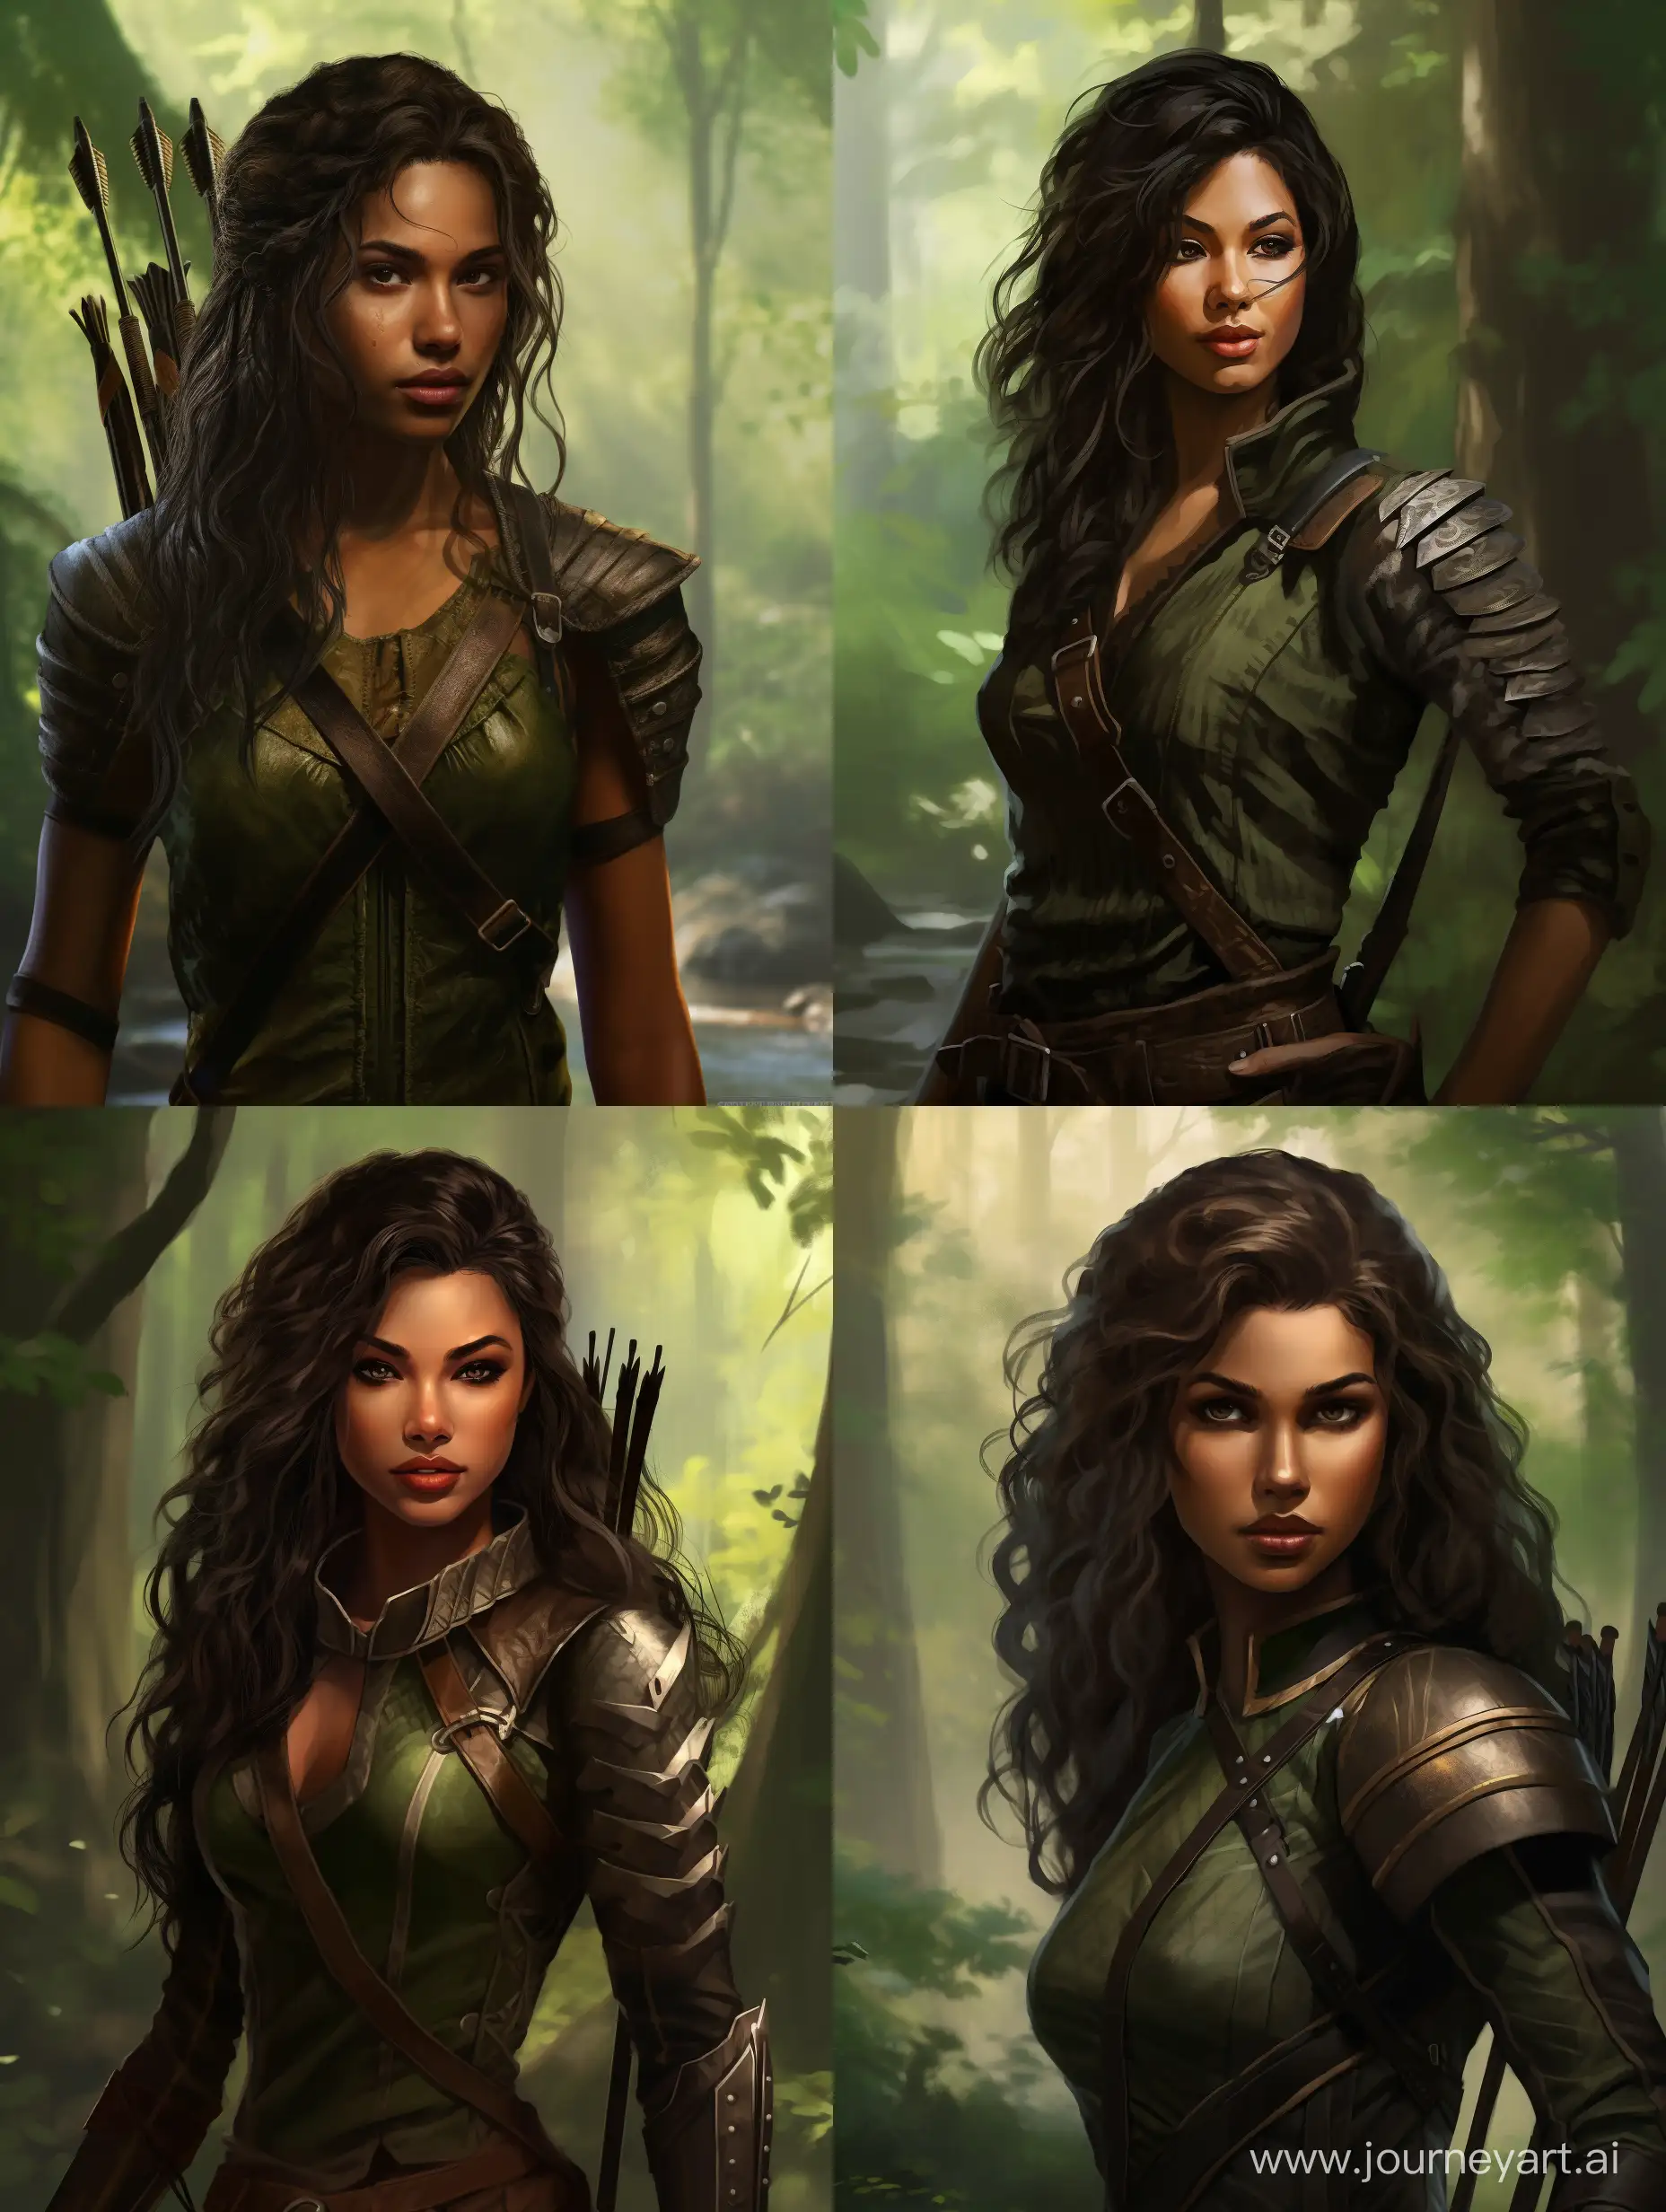 HalfElf-Ranger-Woman-in-Forest-with-Bow-Fantasy-Portrait